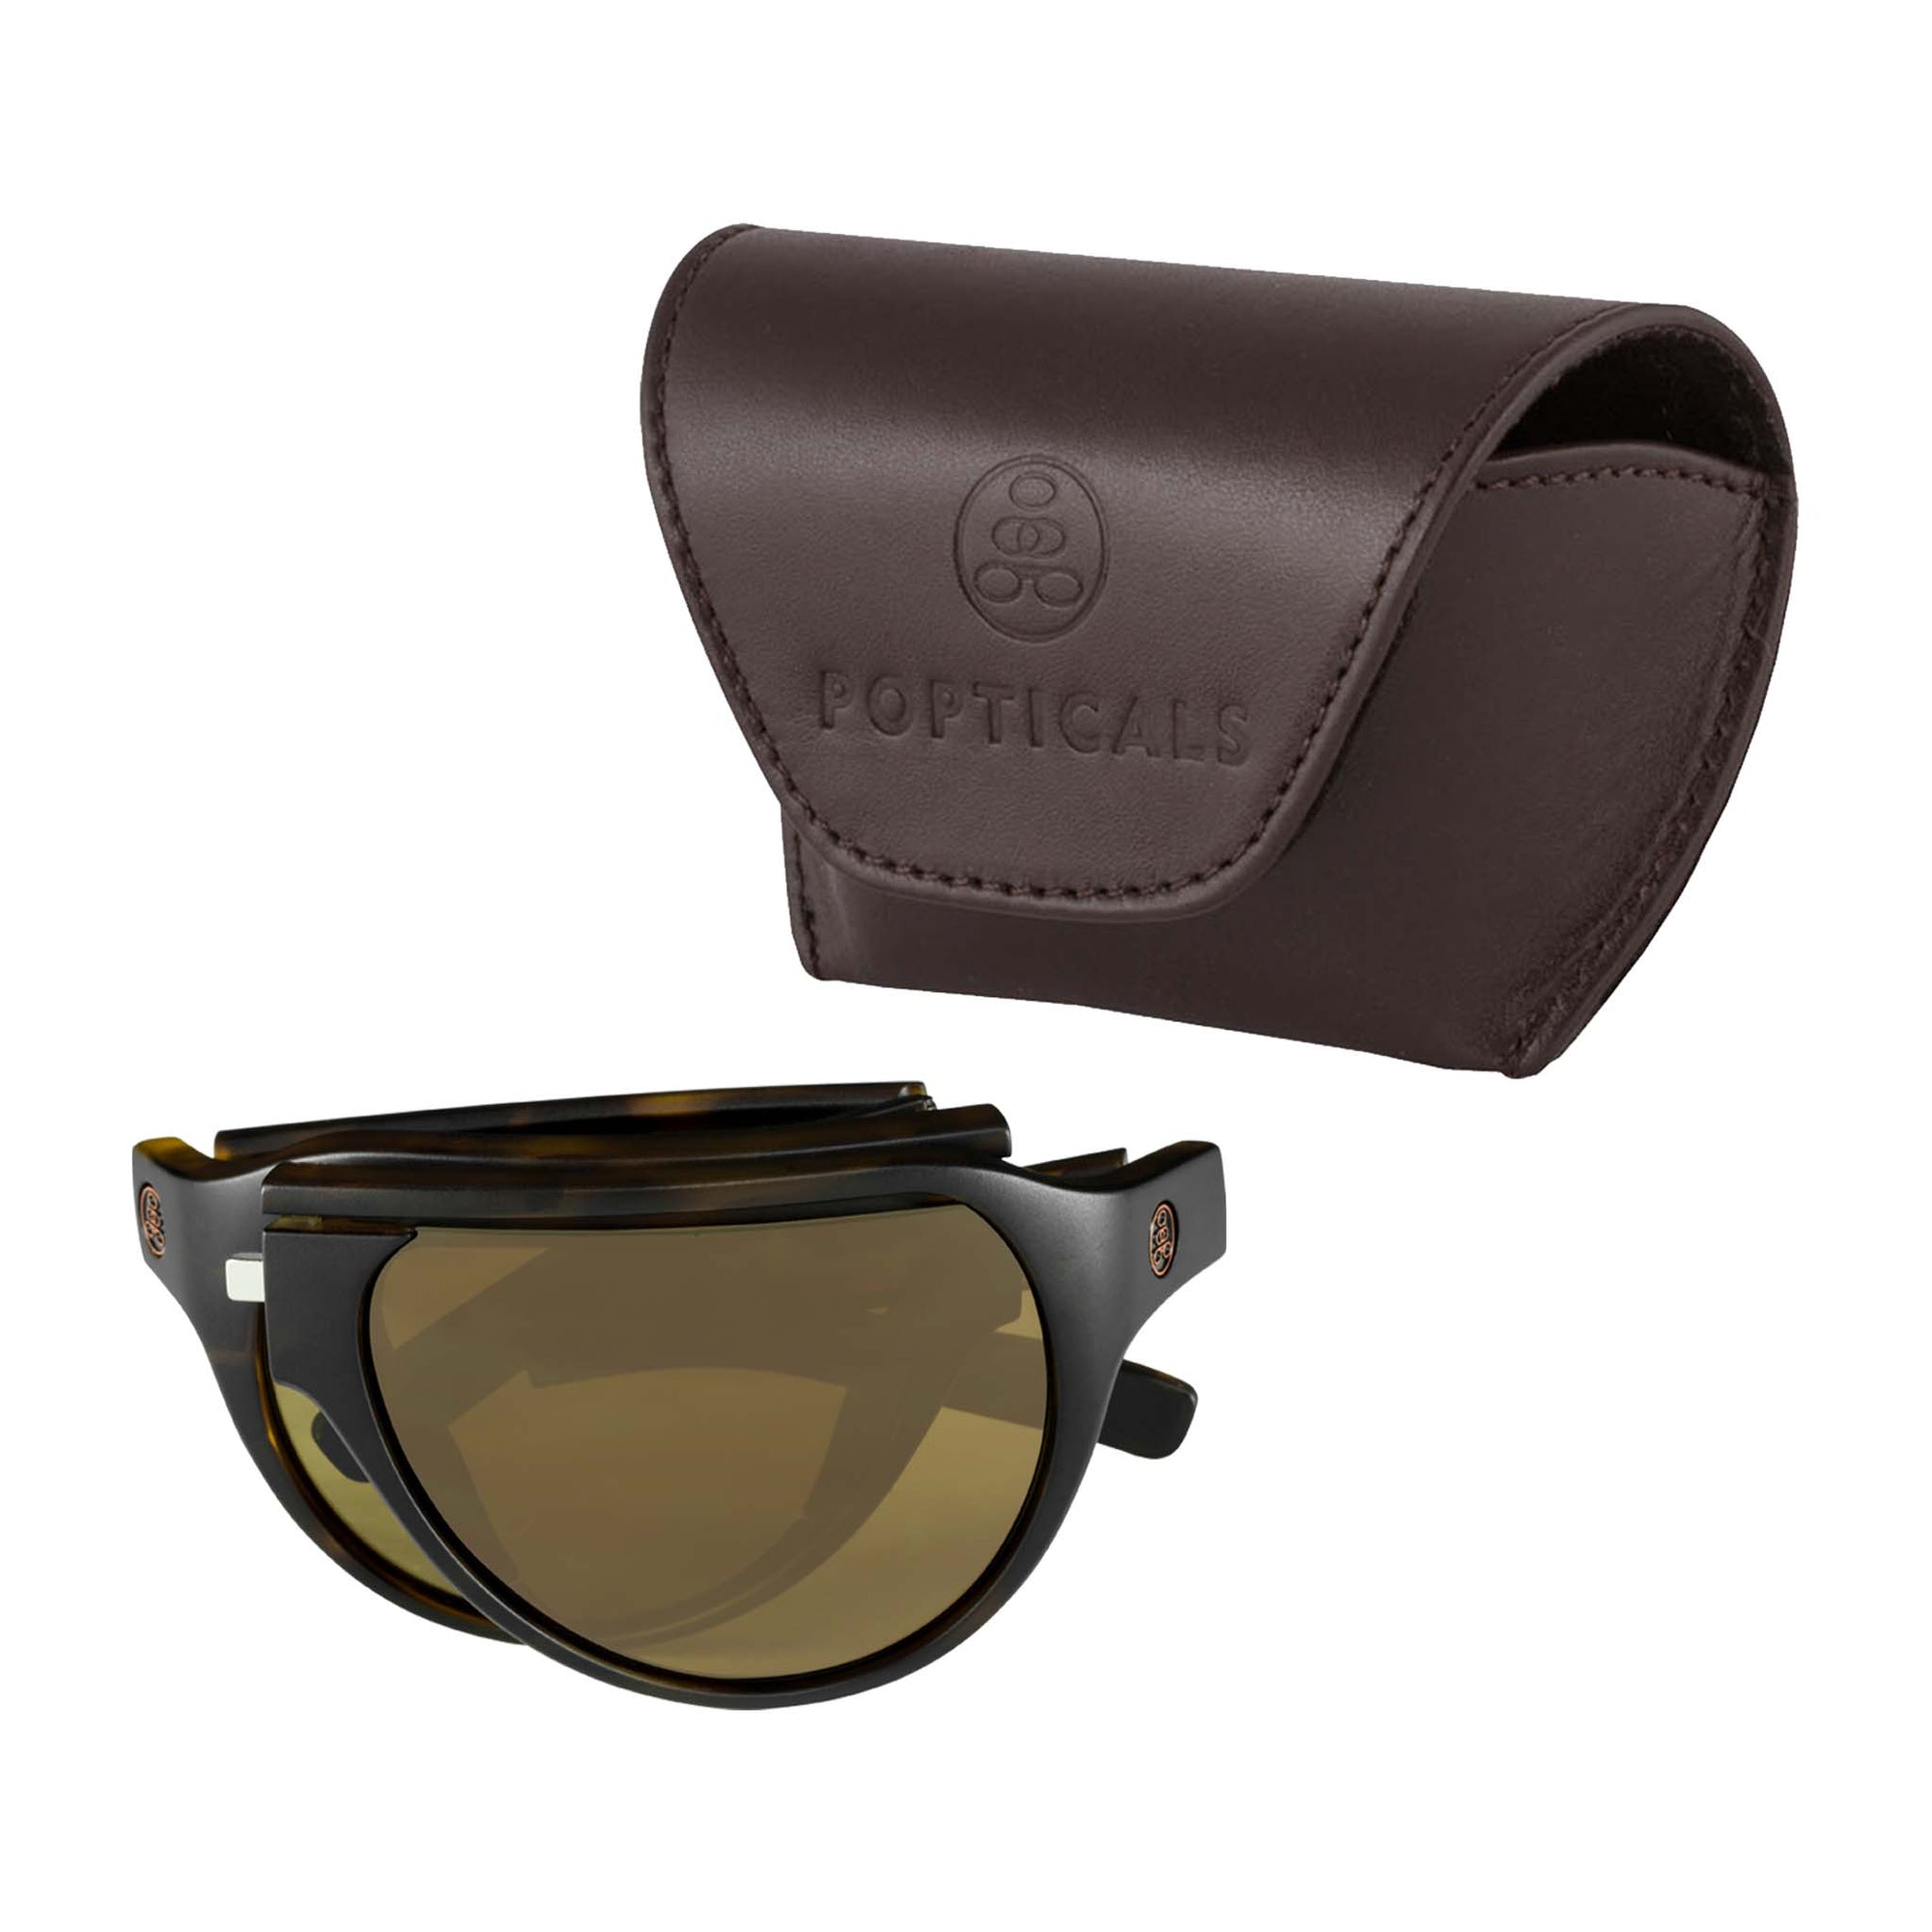 Popticals, Premium Compact Sunglasses, PopAir, 300010-CUNS, Standard Sunglasses, Matte Tortoise Frame, Brown Lenses, Case View